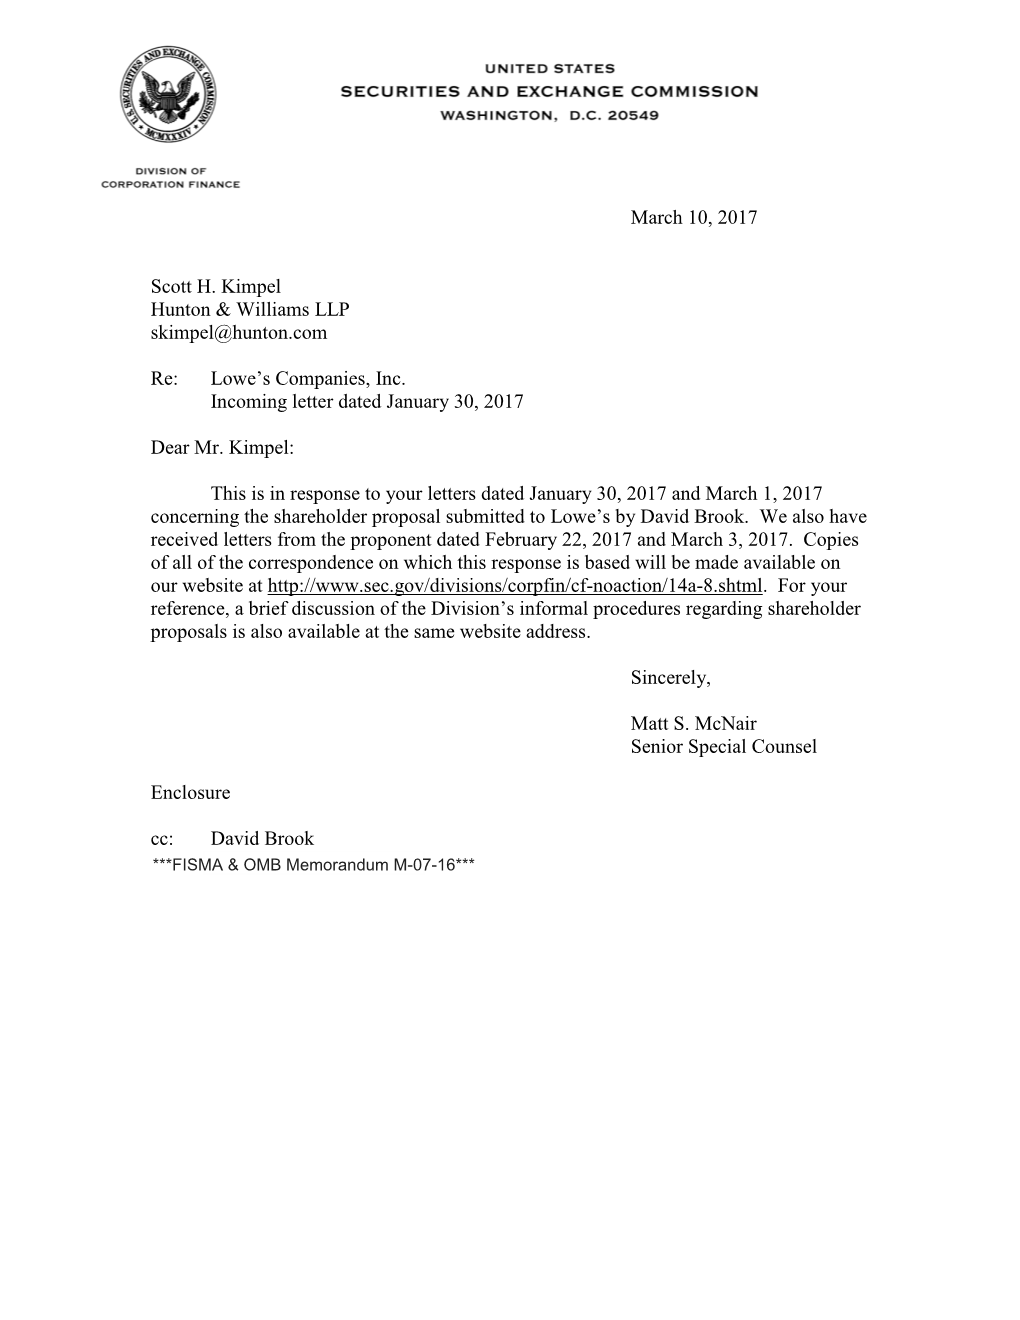 Lowe's Companies, Inc.; Rule 14A-8 No-Action Letter